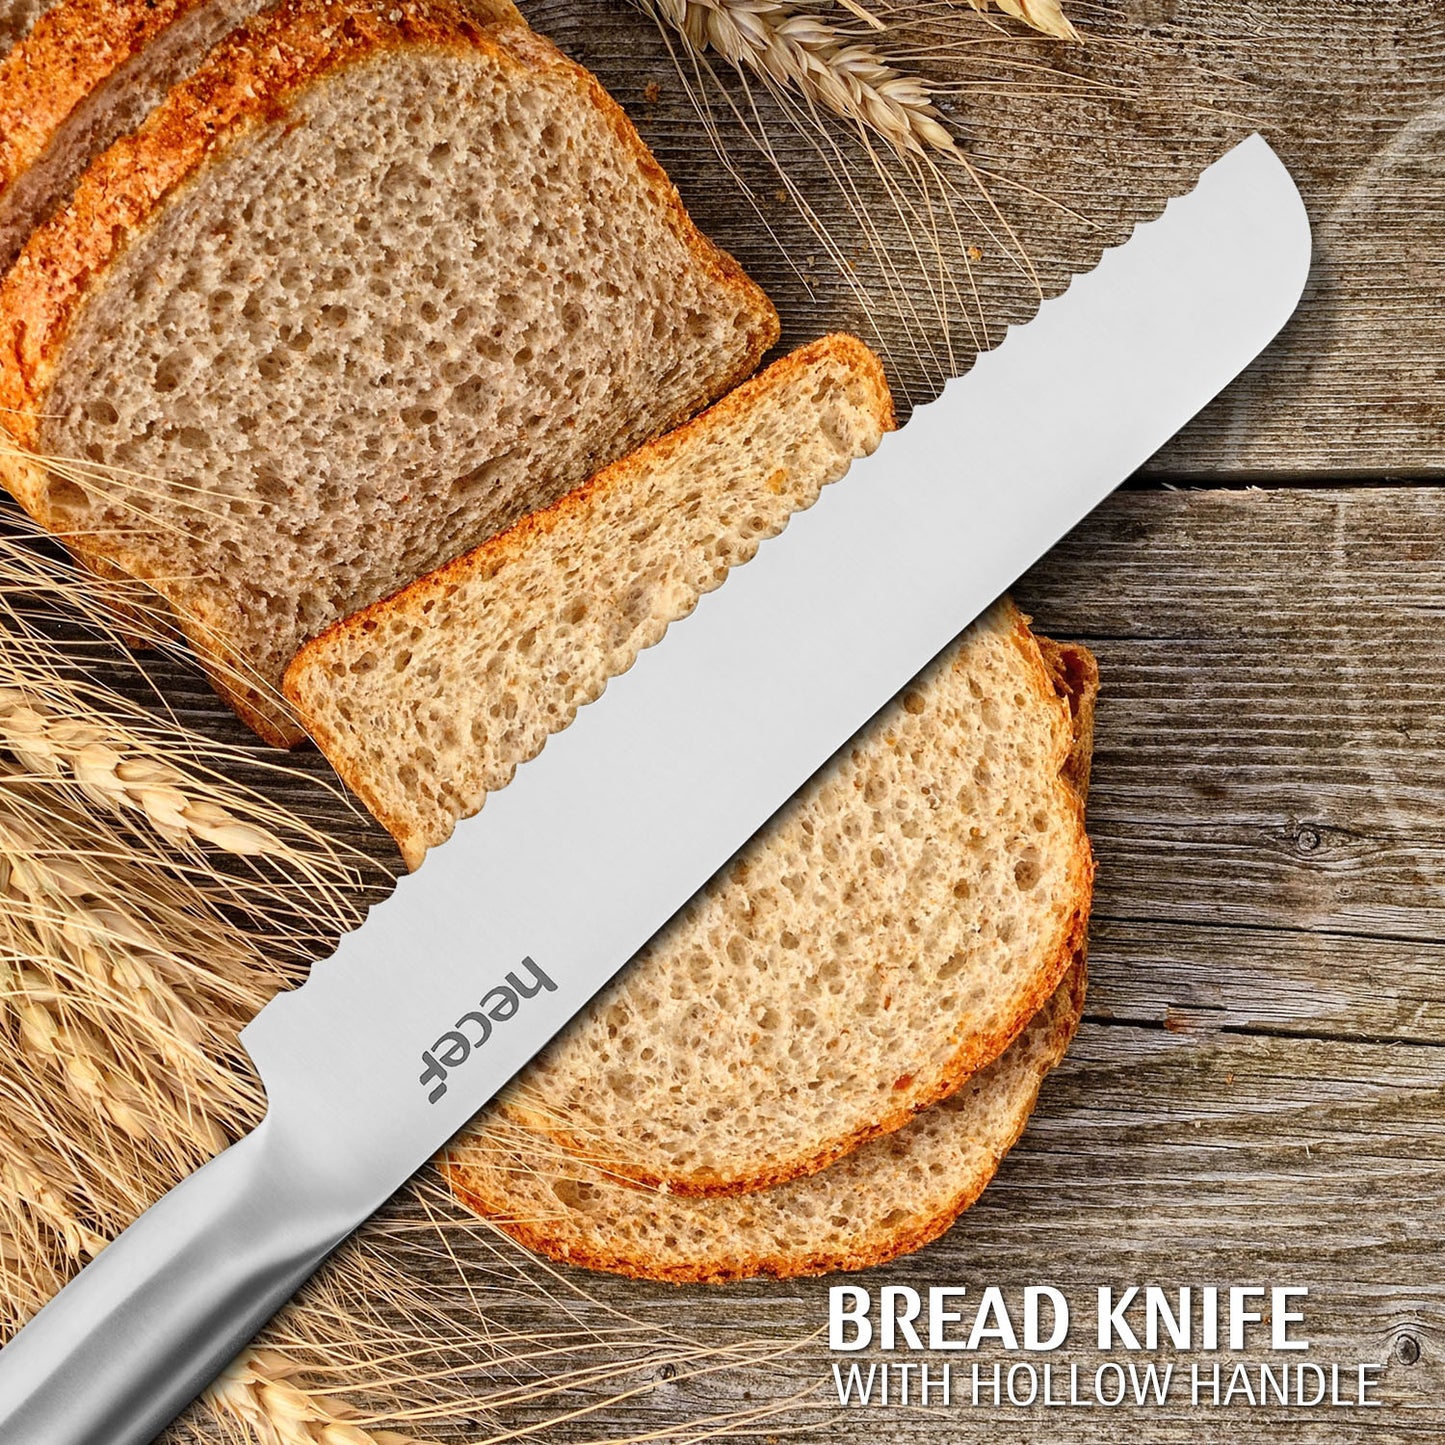 Hecef Kitchen Knife Set of 10 with Knife Block & Honing Steel - Hecef Kitchen